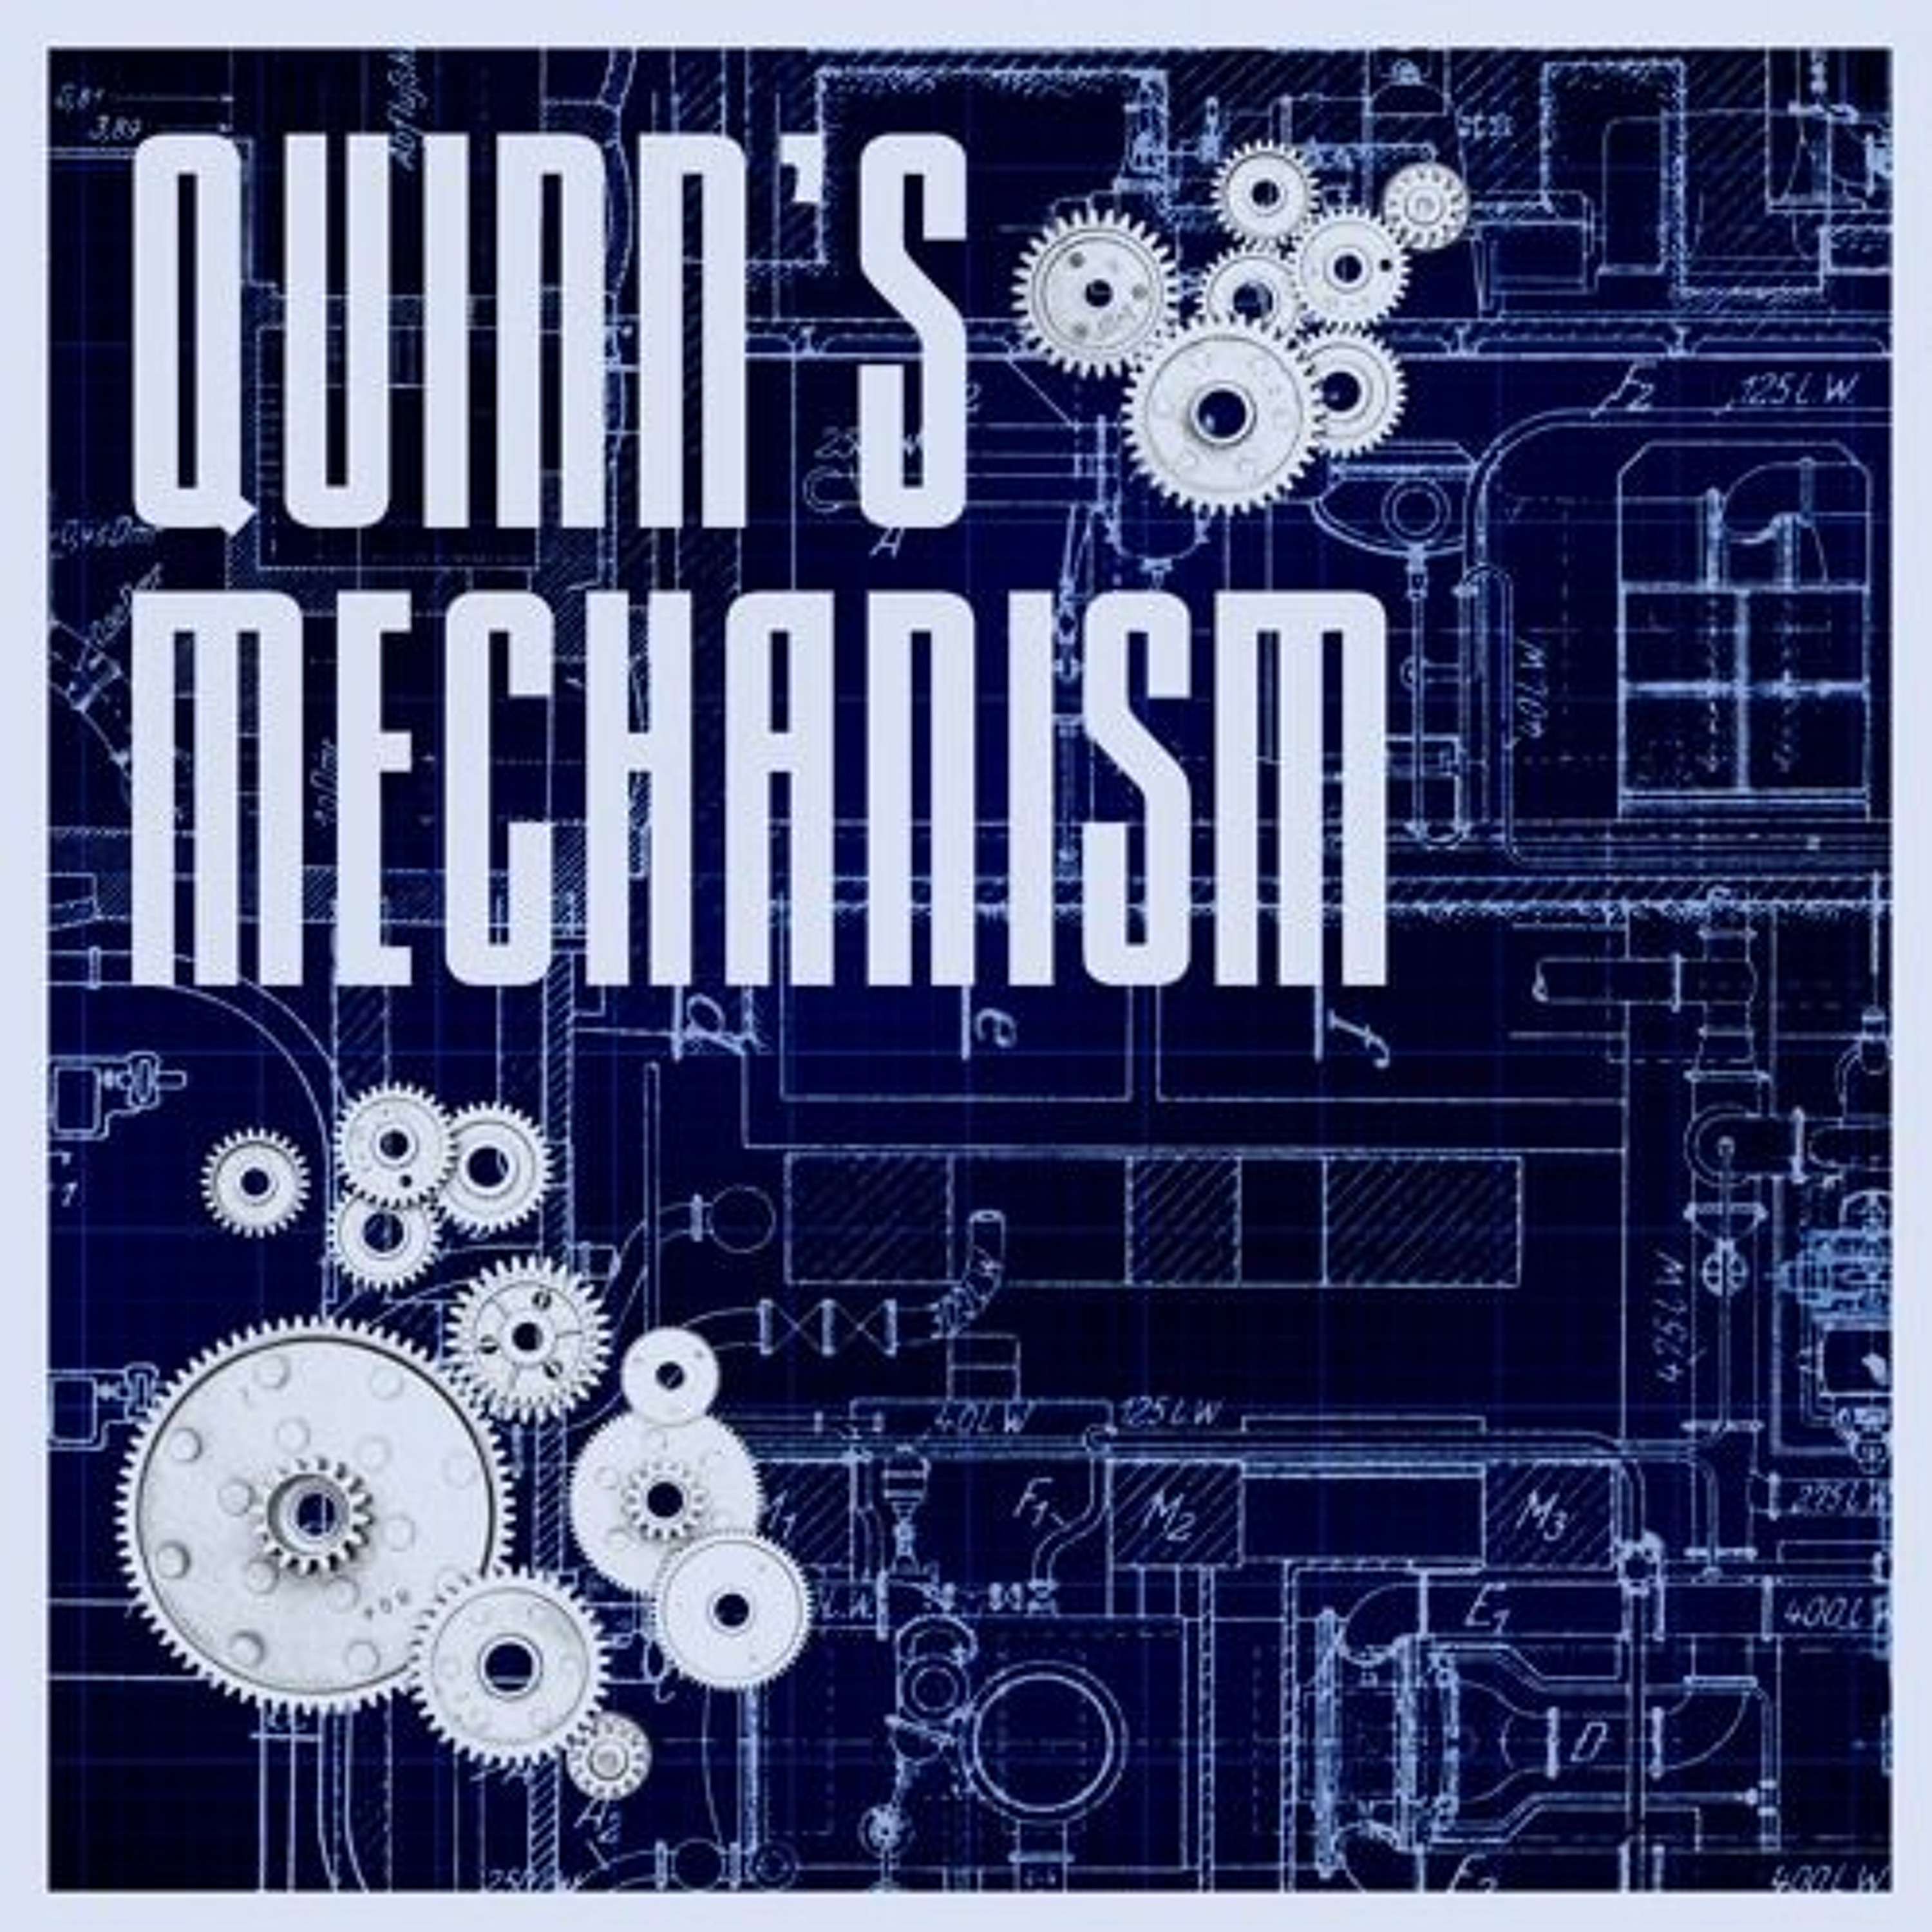 Quinn’s Mechanism - Third Act, The SecondComponent